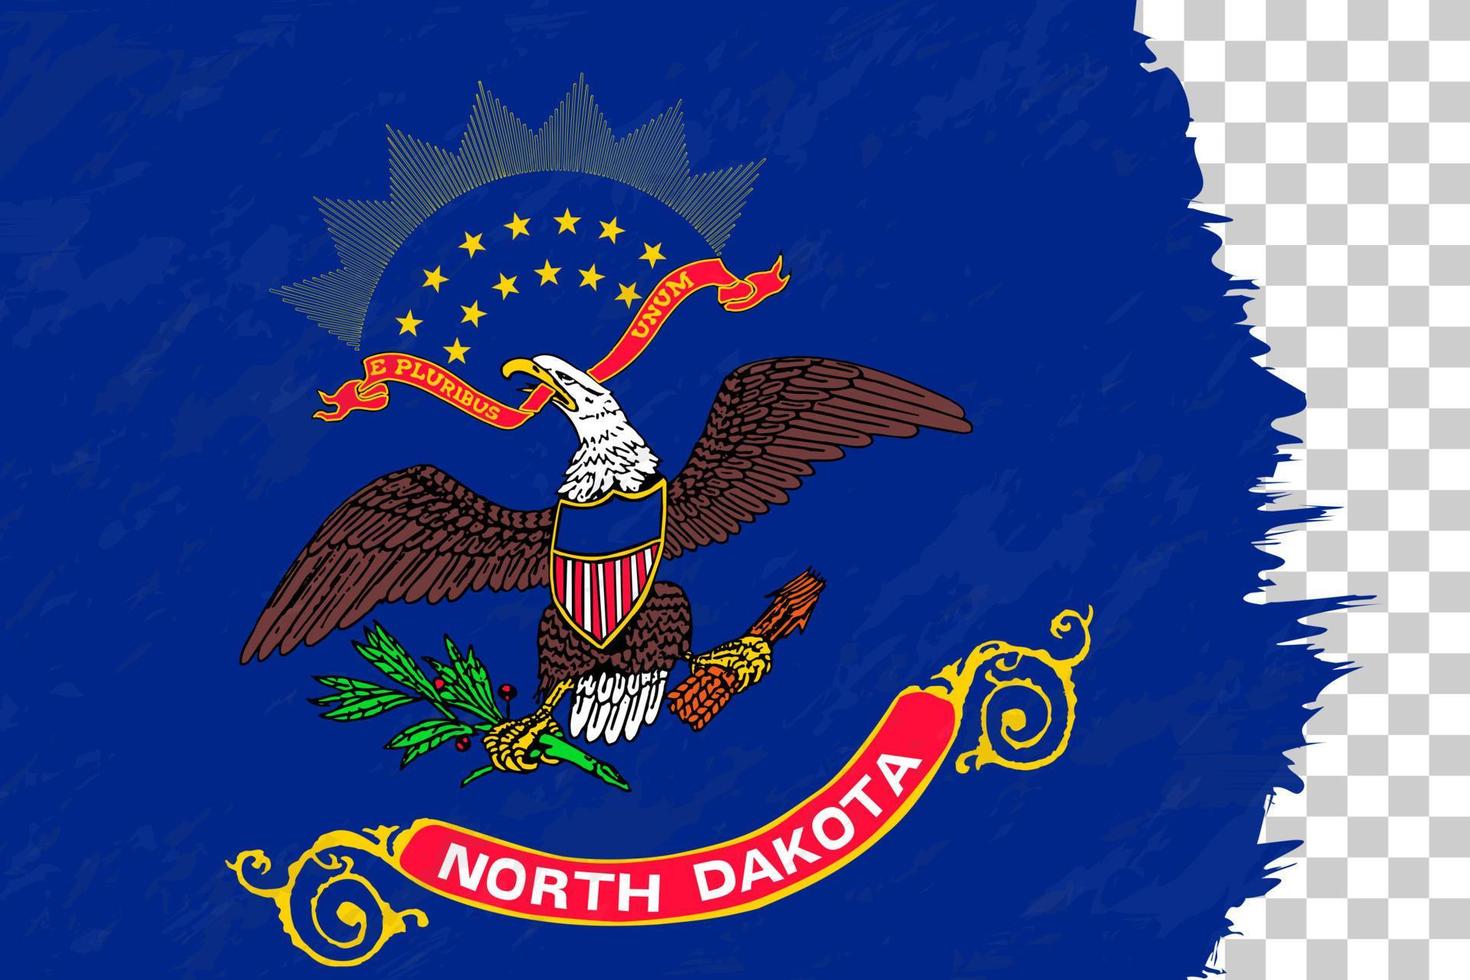 Horizontal Abstract Grunge Brushed Flag of North Dakota on Transparent Grid. vector